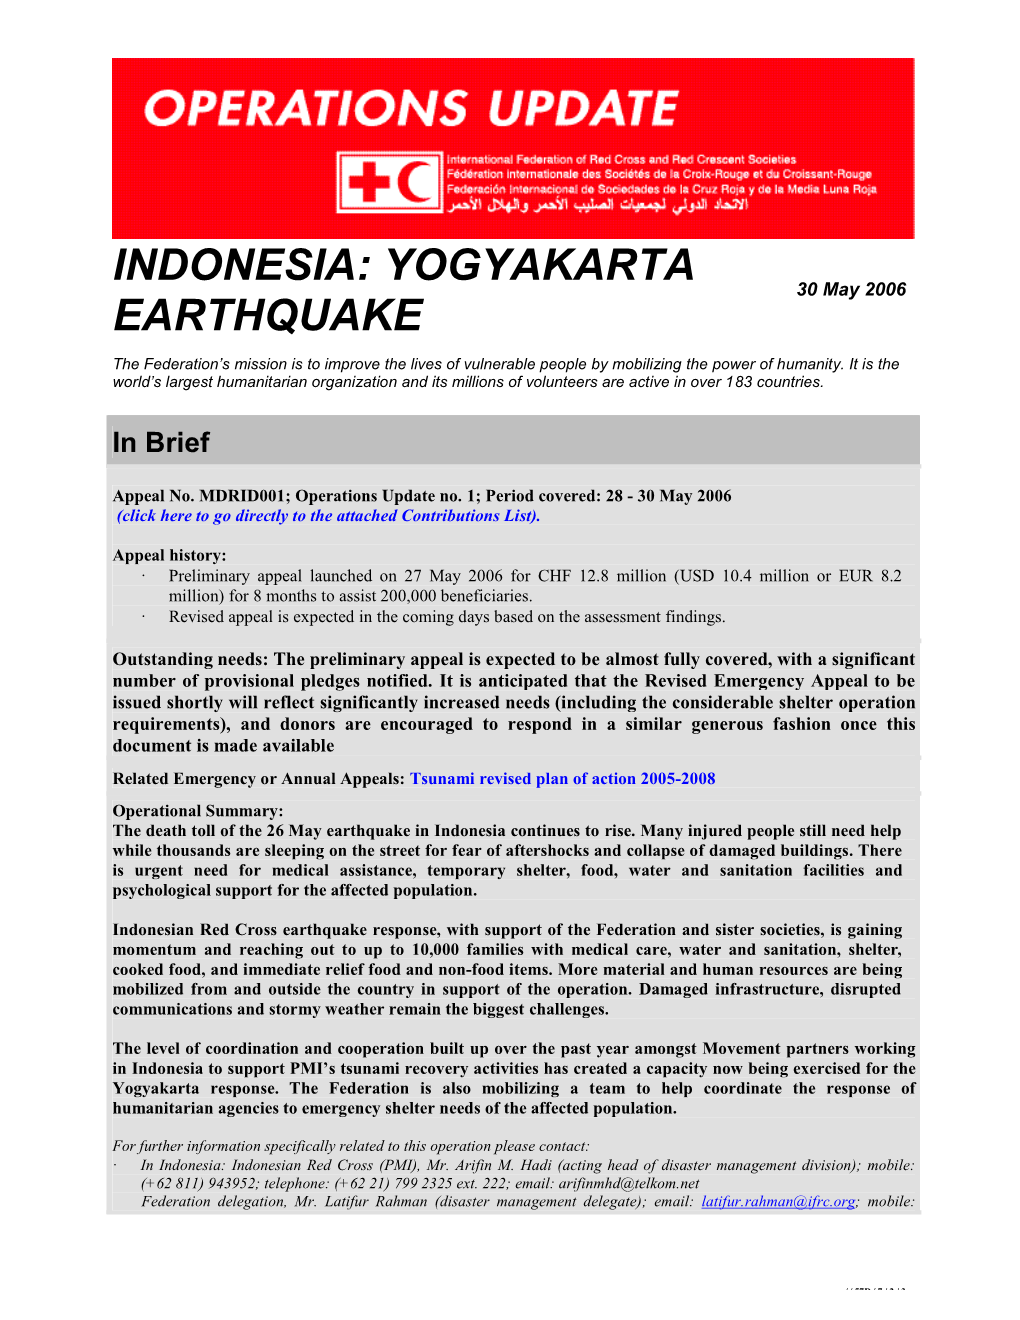 Indonesia: Yogyakarta Earthquake